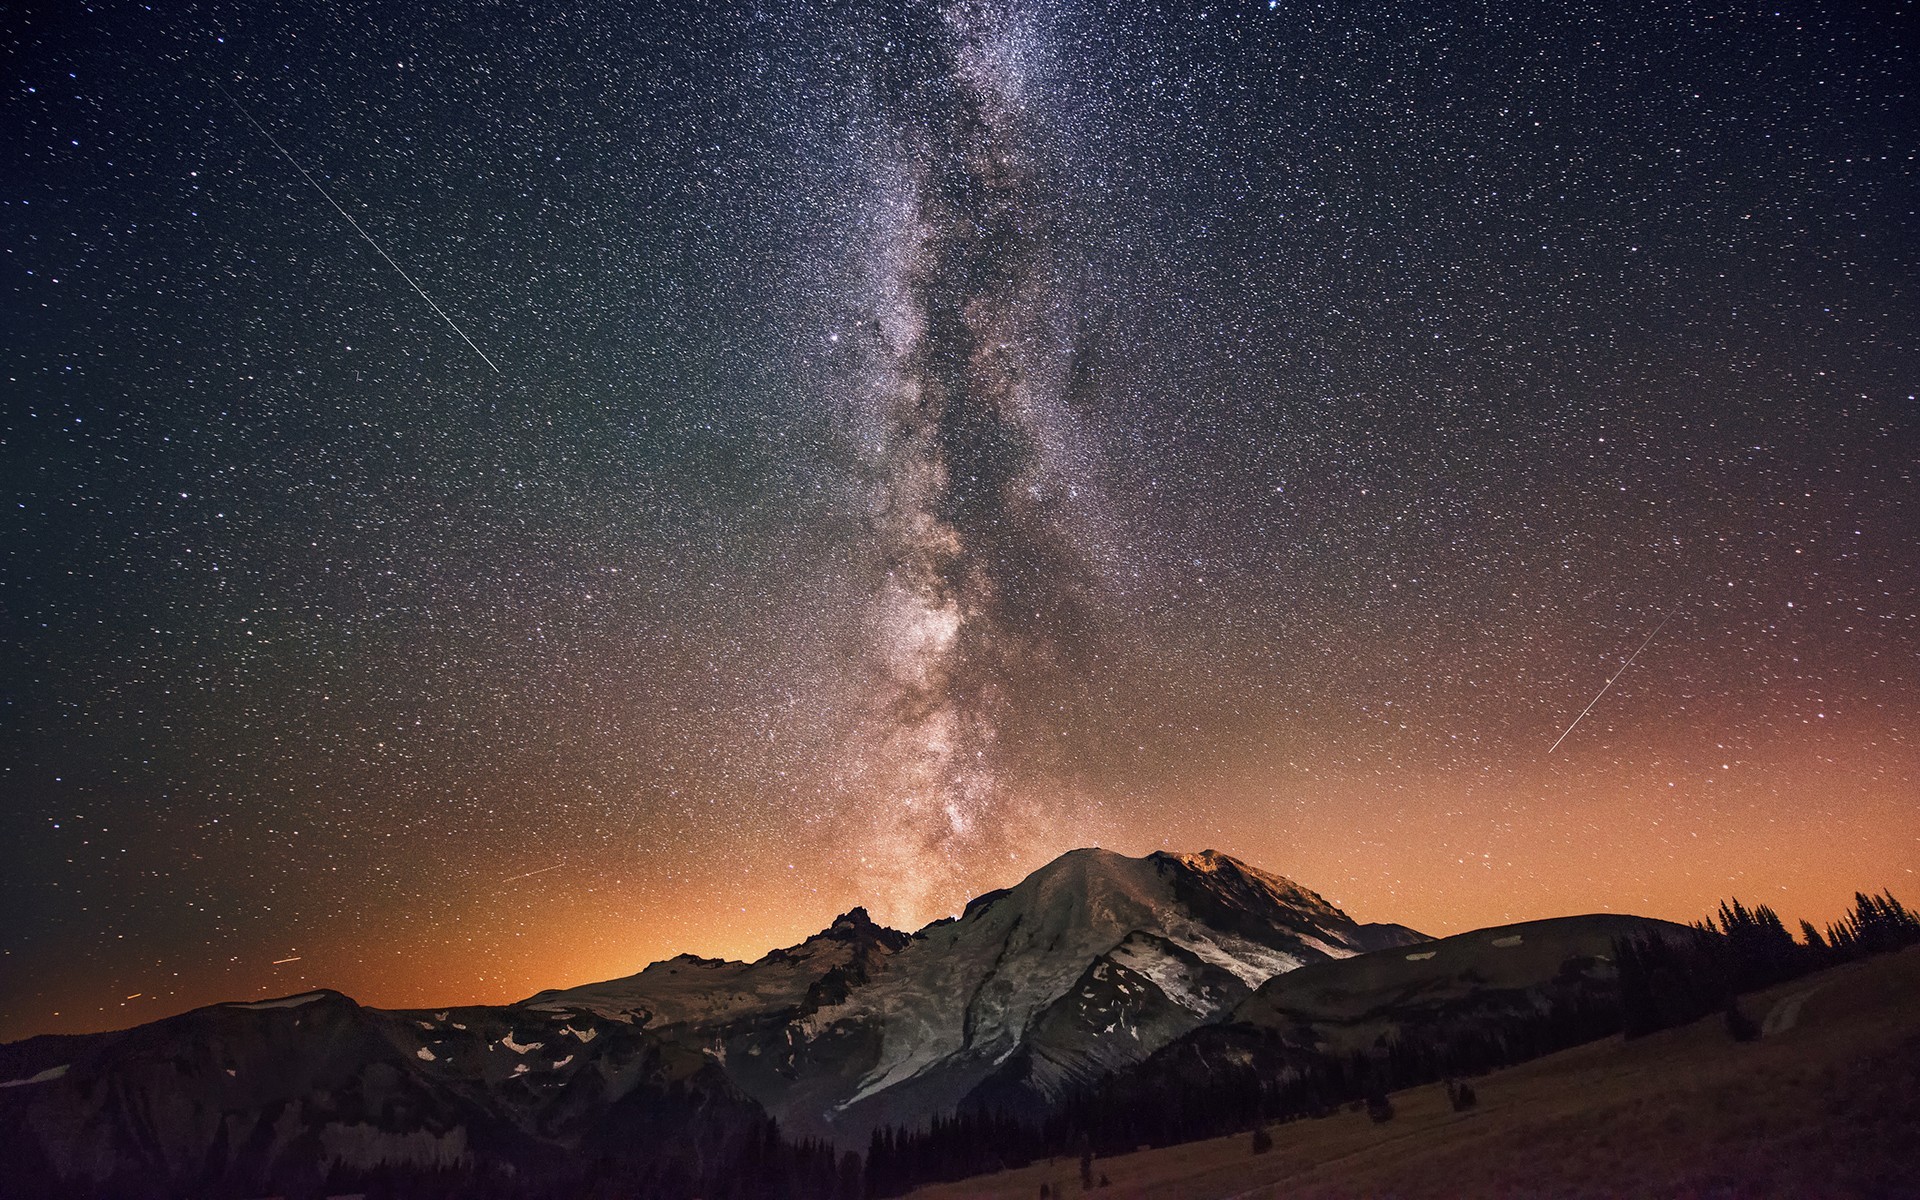 General 1920x1200 landscape nature shooting stars night sky sky stars mountains snowy peak Milky Way space